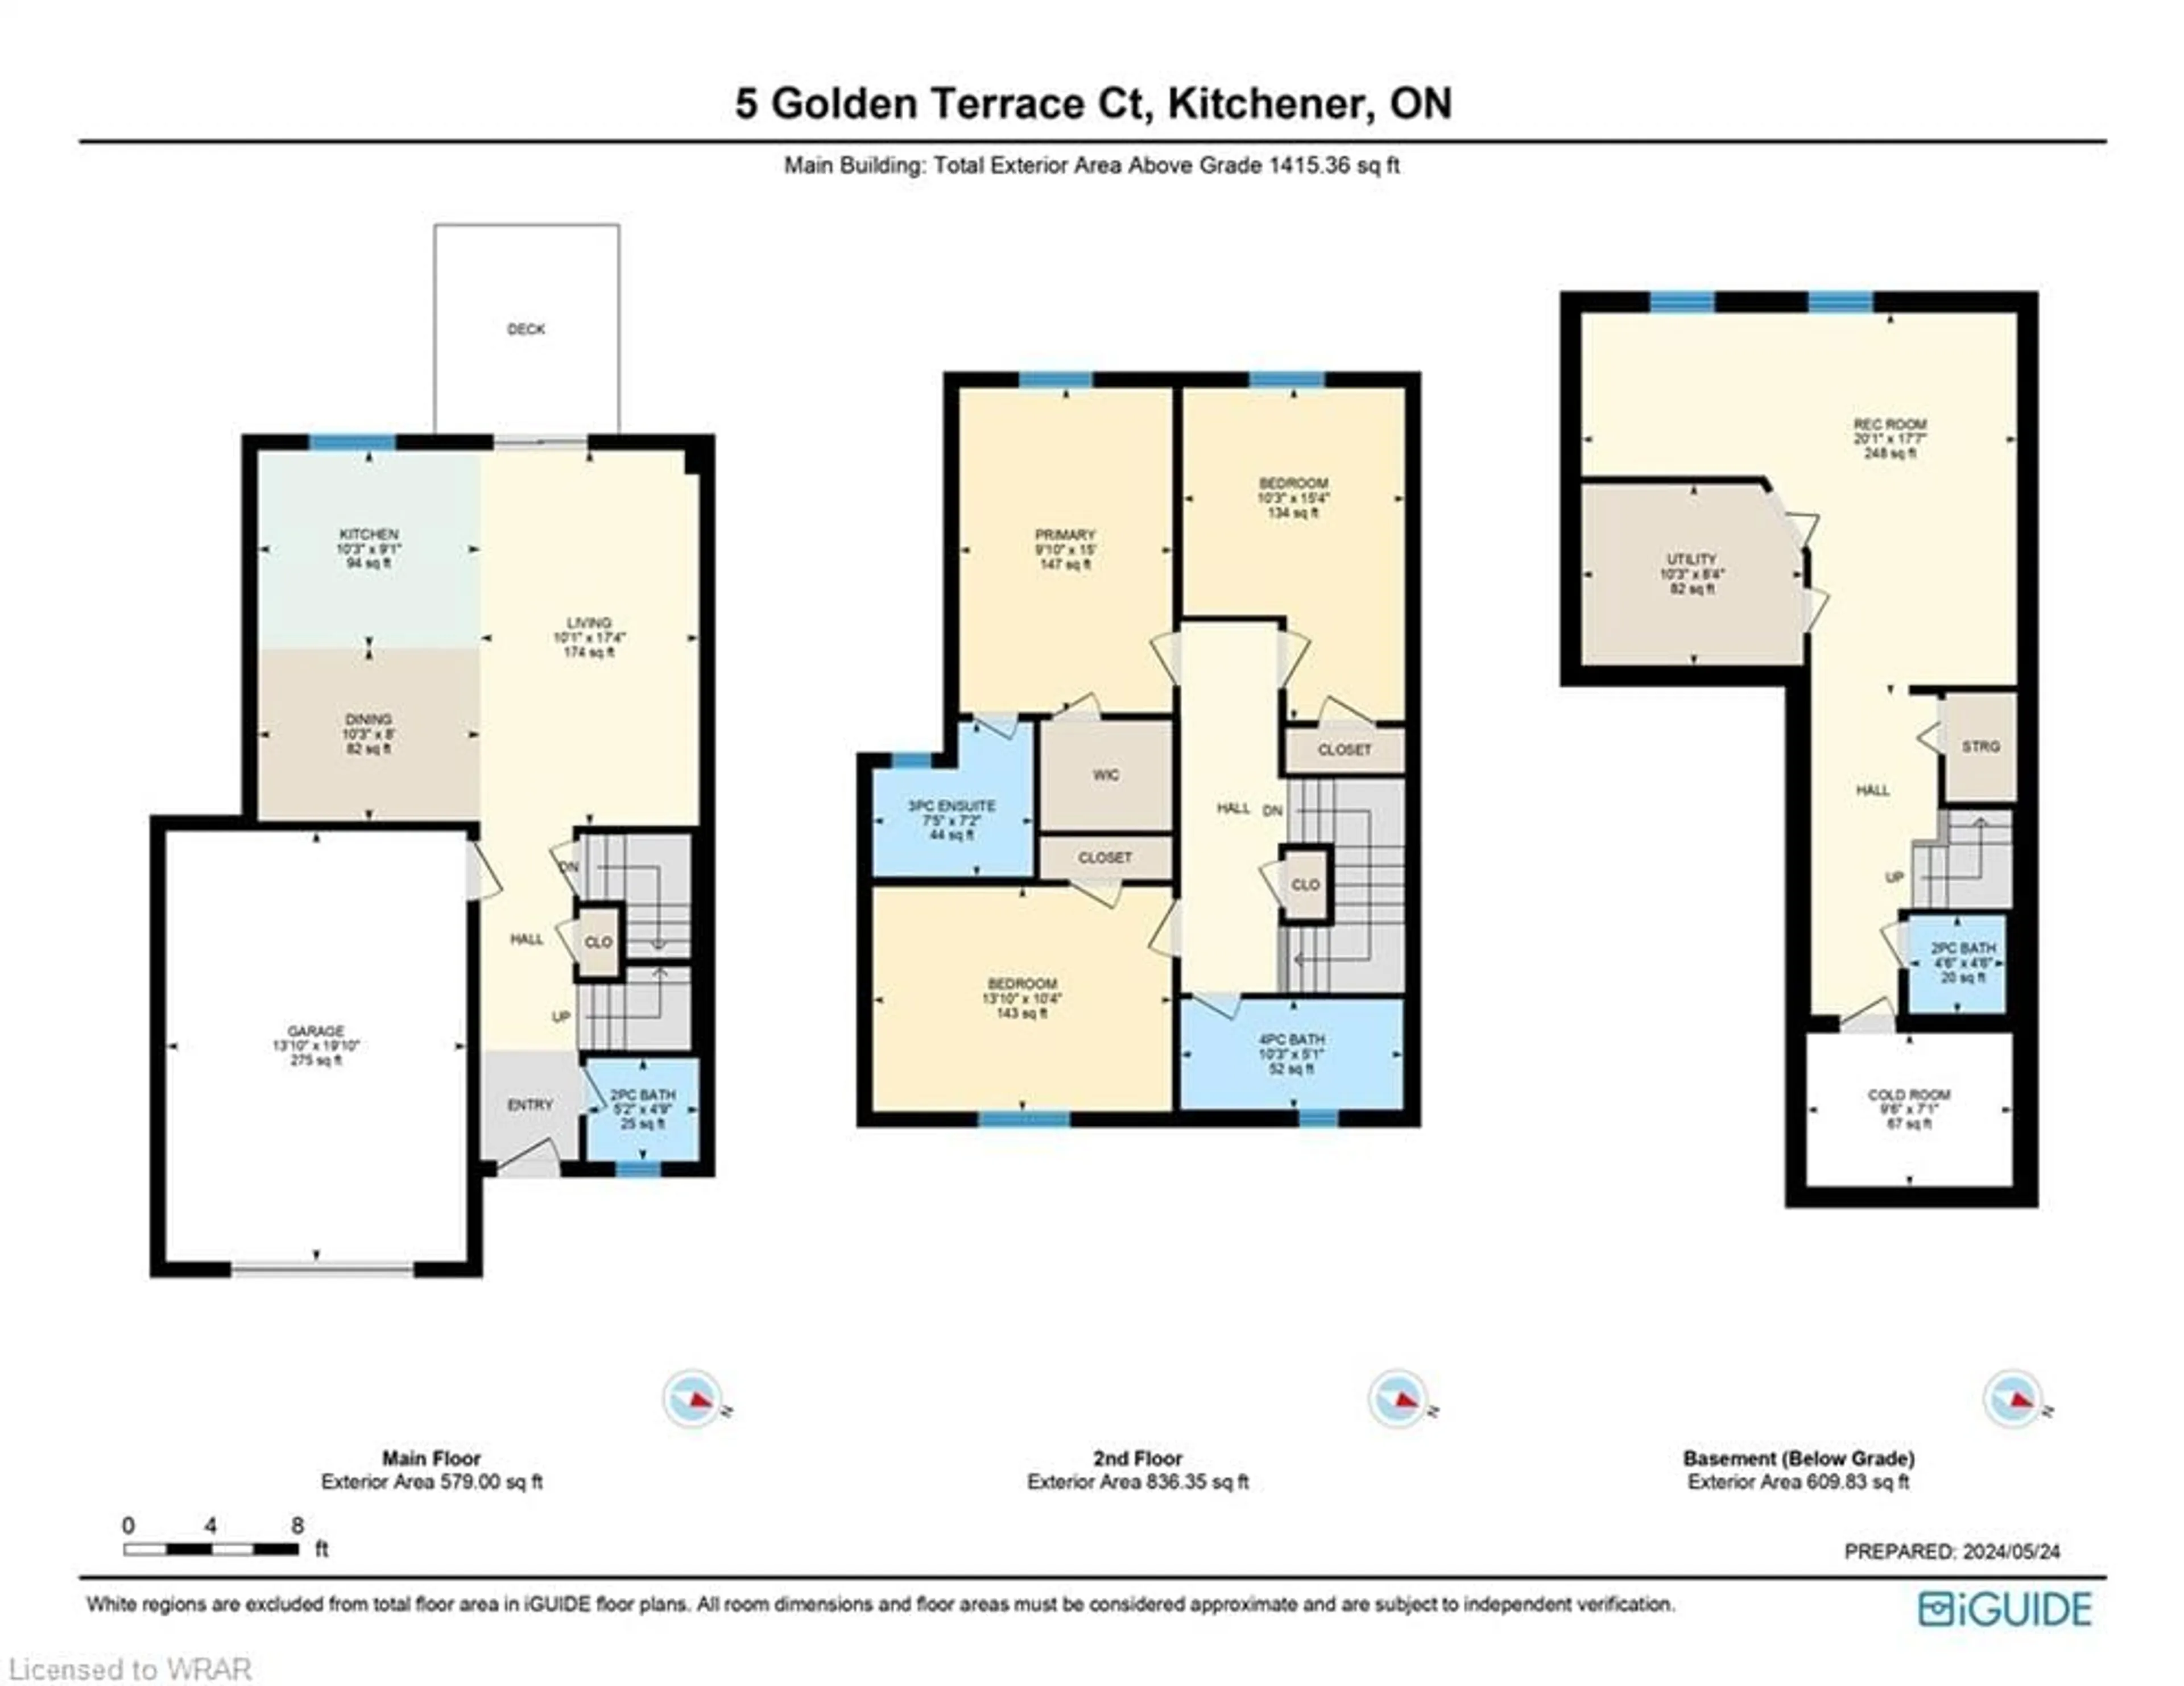 Floor plan for 5 Golden Terrace Crt, Kitchener Ontario N2N 3L2